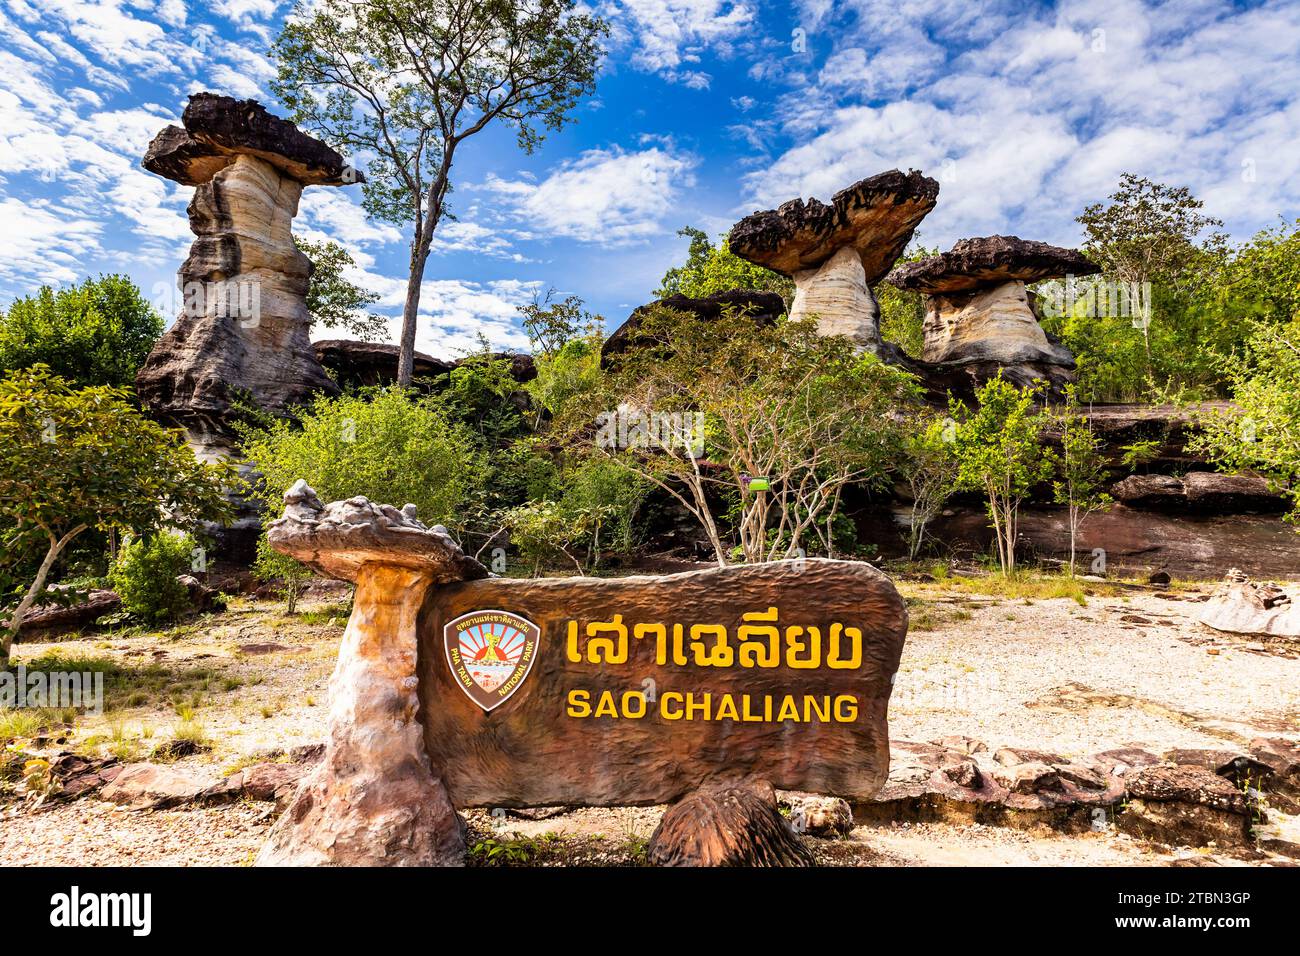 Parco nazionale PHA Taem, rocce erose di funghi "Sao Chaliang", sito di dipinti rupestri, Ubon Ratchathani, Isan, Thailandia, sud-est asiatico, Asia Foto Stock